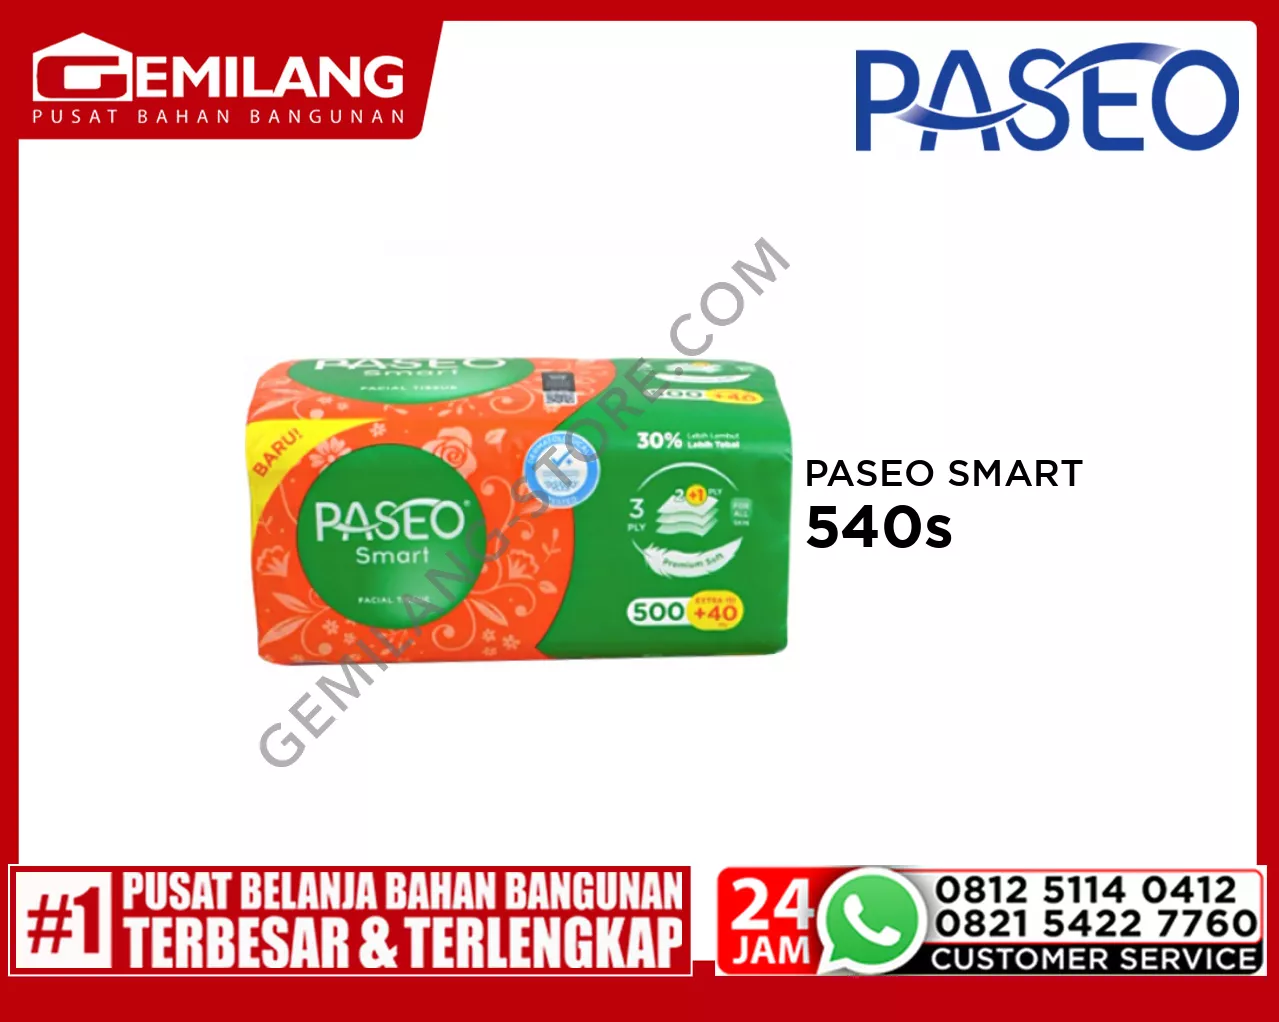 PASEO SMART 540s